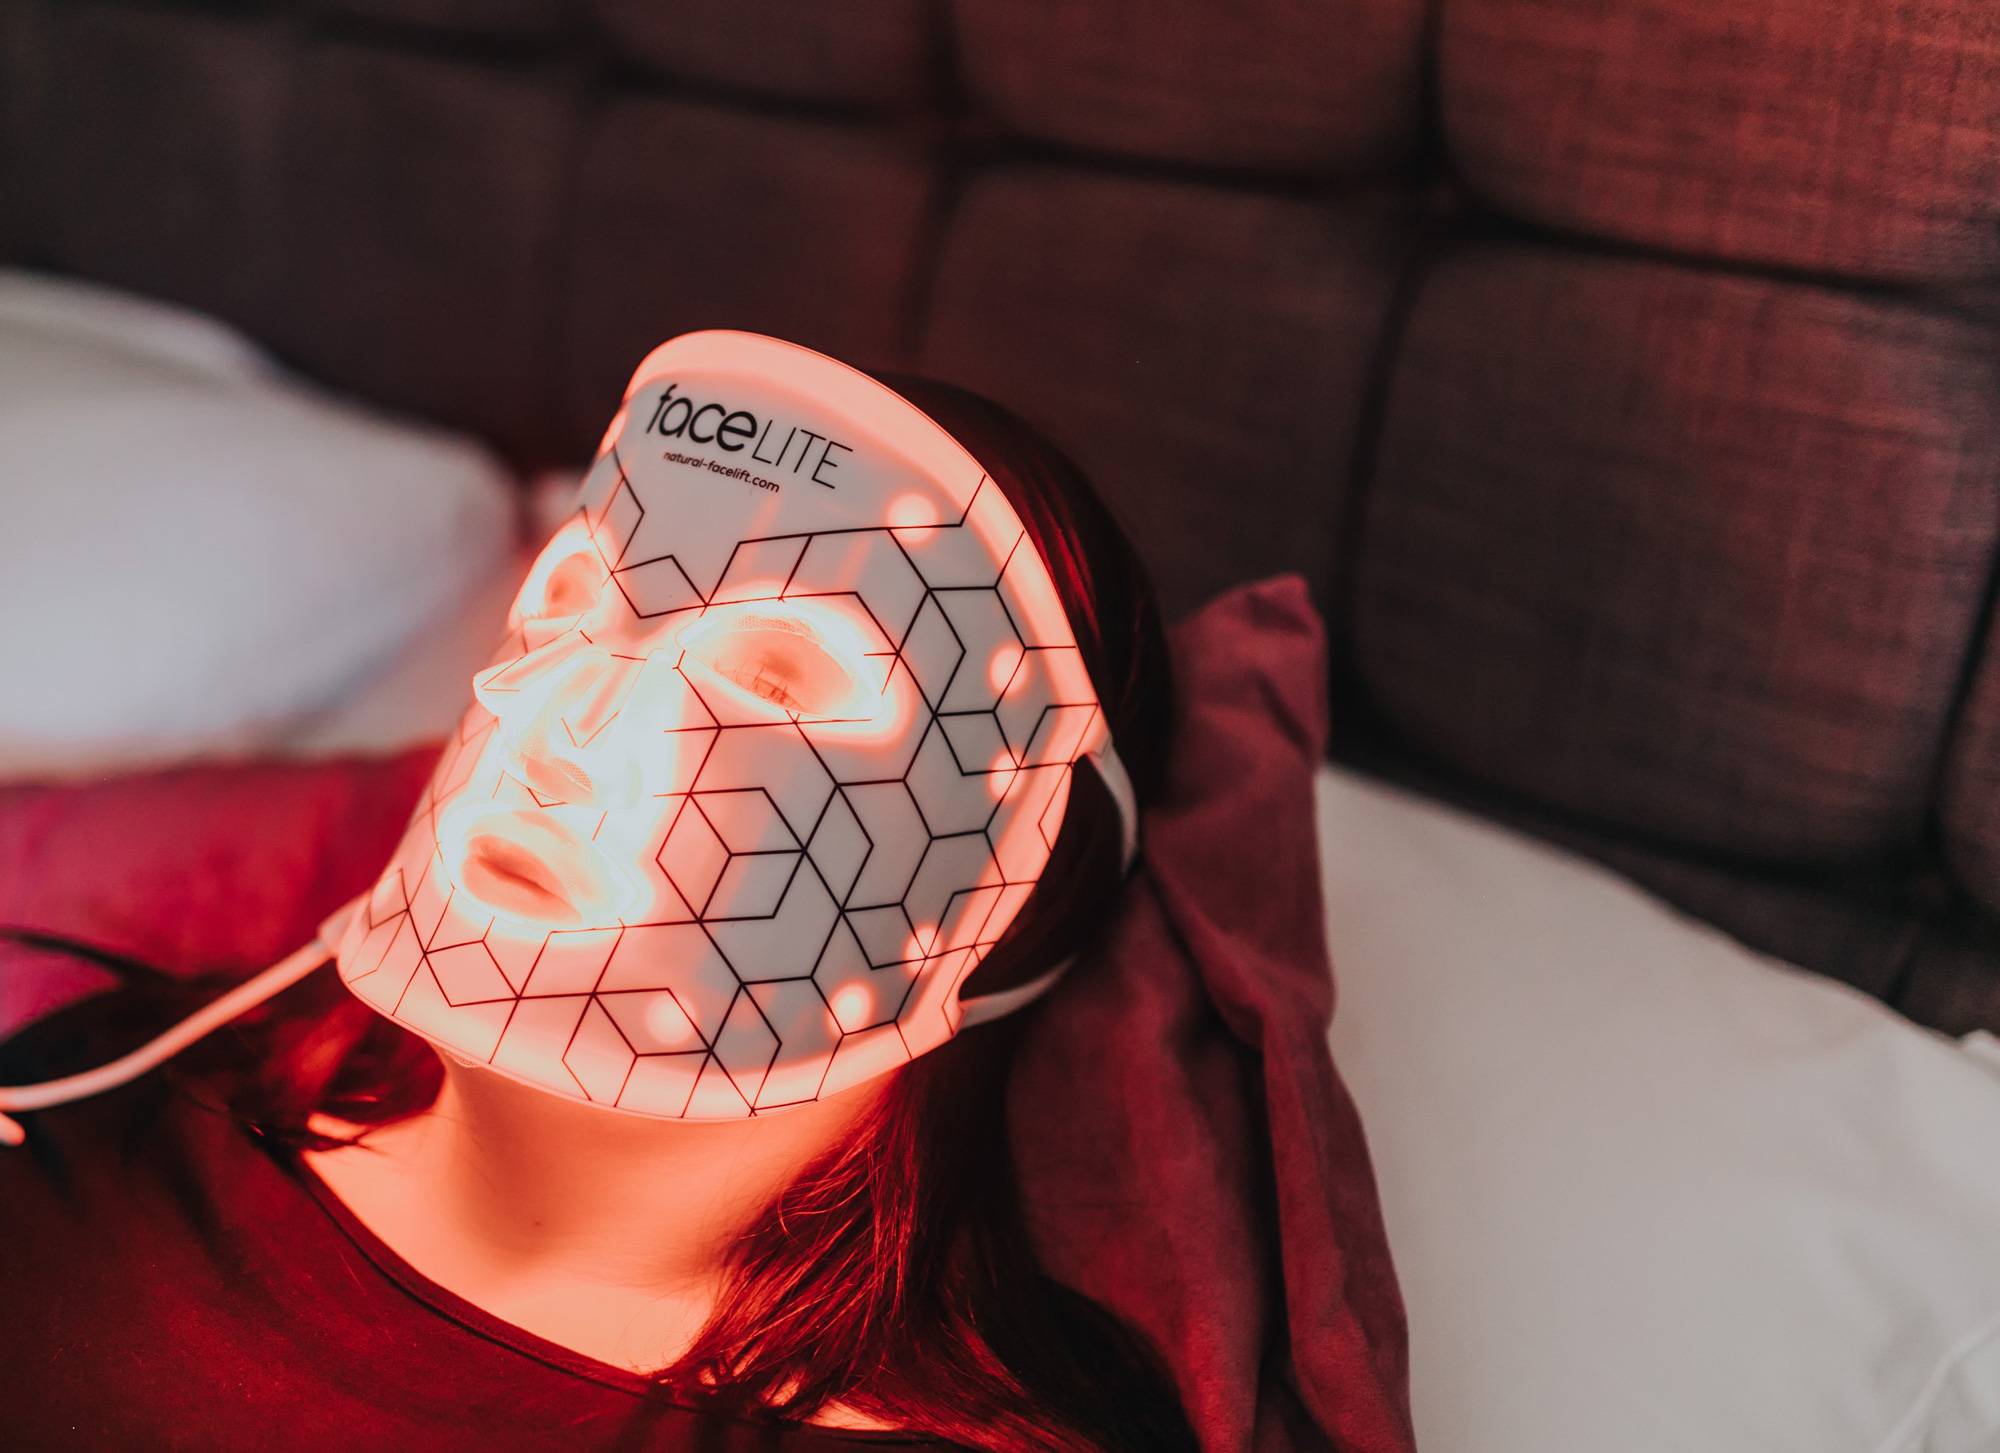 FaceLite LED Mask in use